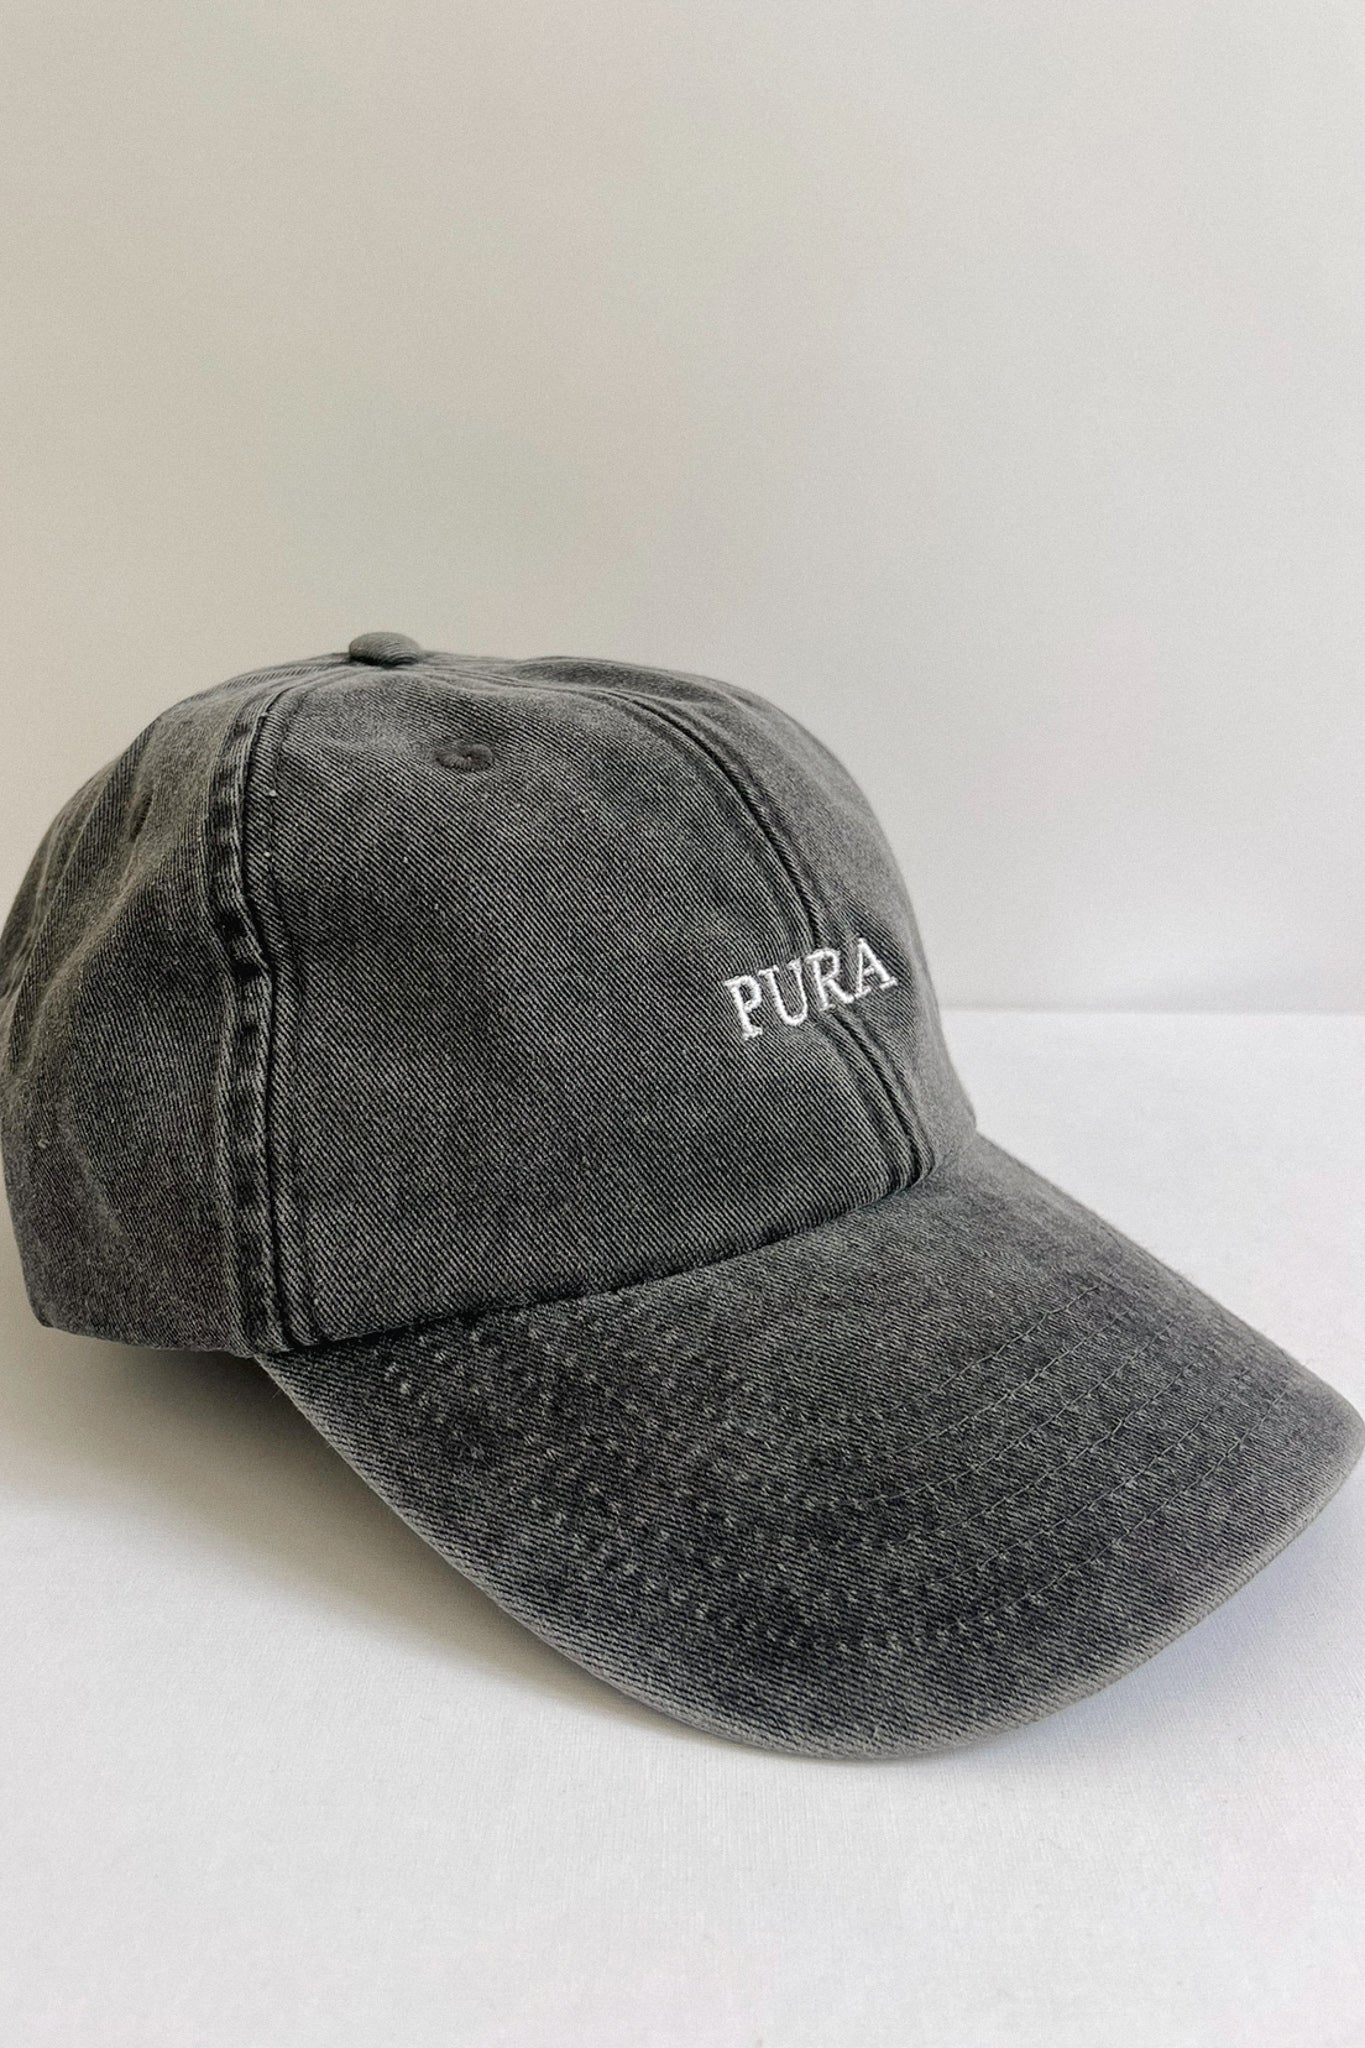 Dark cap THE PURA made of 100% organic cotton by Pura Clothing